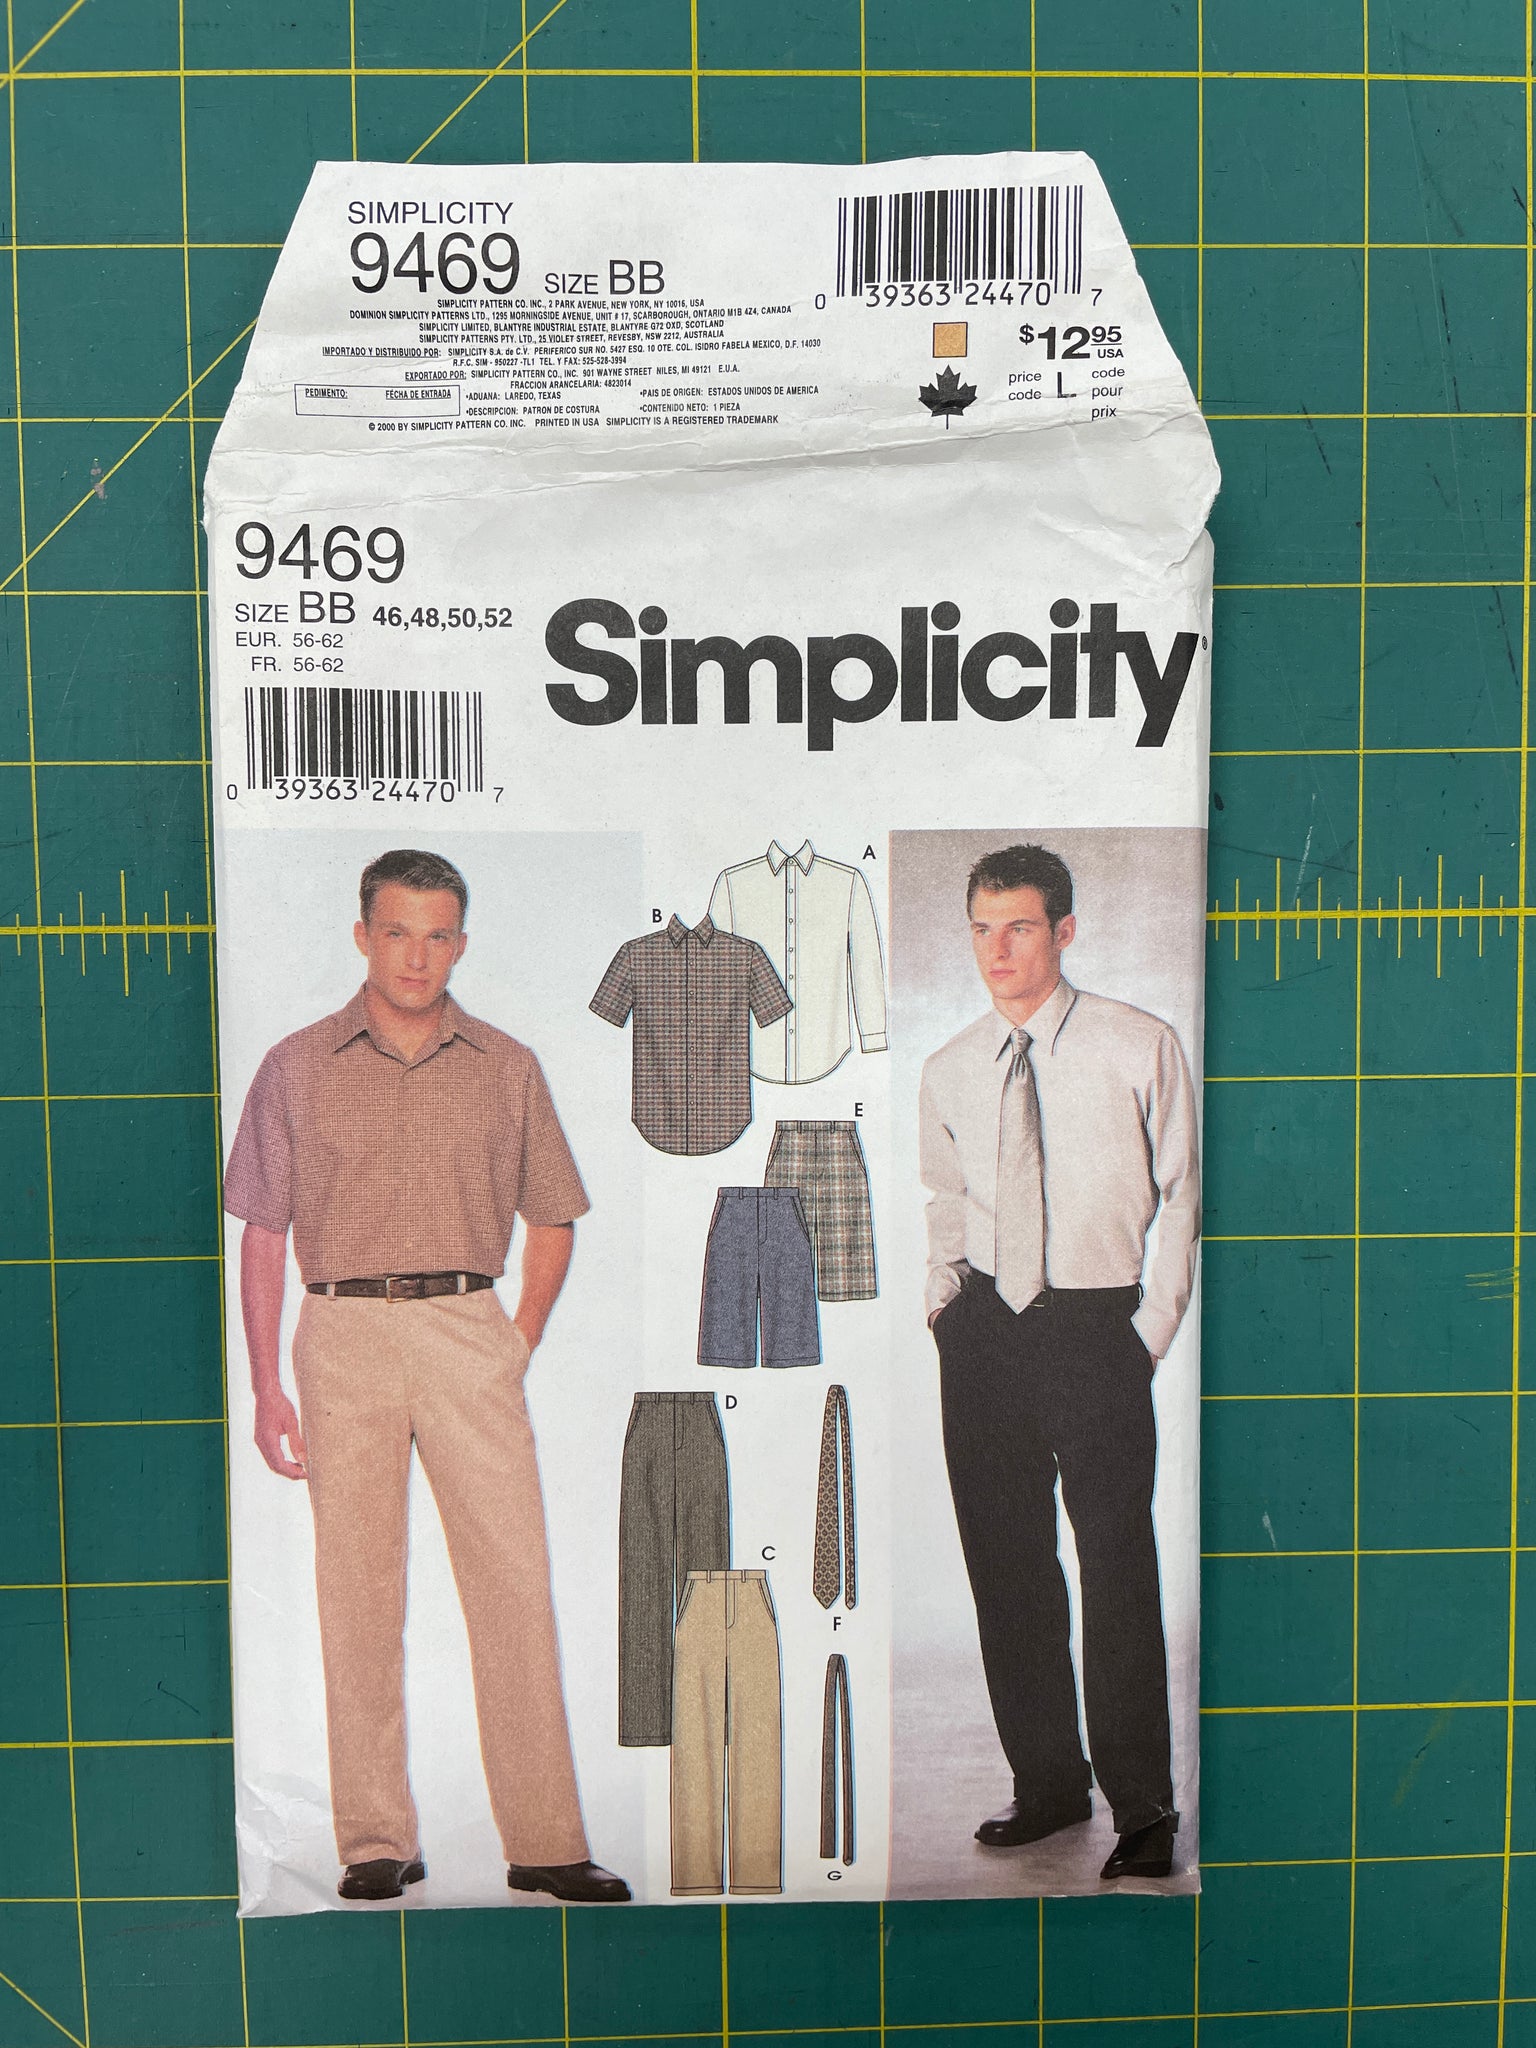 2000 Simplicity 9469 Sewing Pattern - Men's Shirts, Pants and Ties